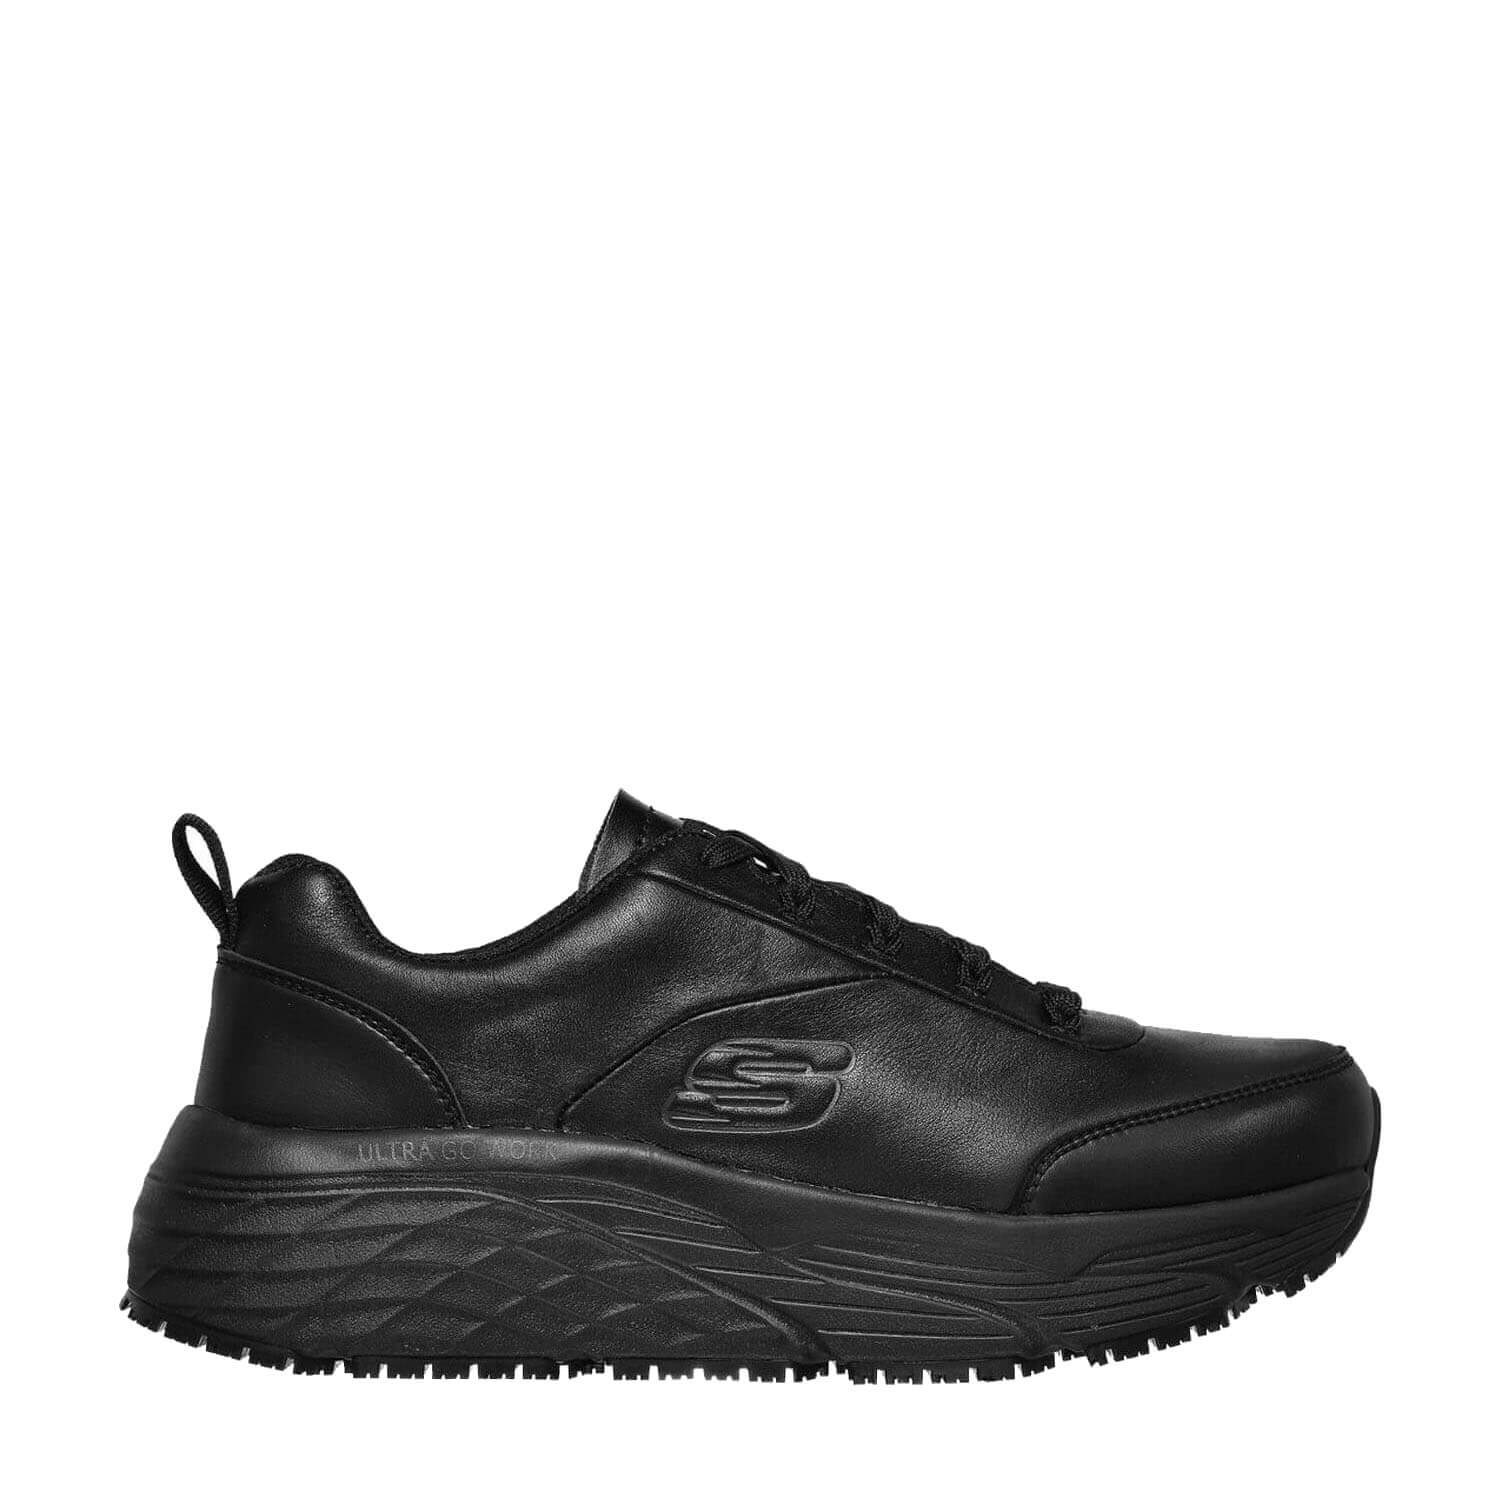 Skechers Work Elite Kajus Toes – Shoe Slip-Resistant 108015 Steel